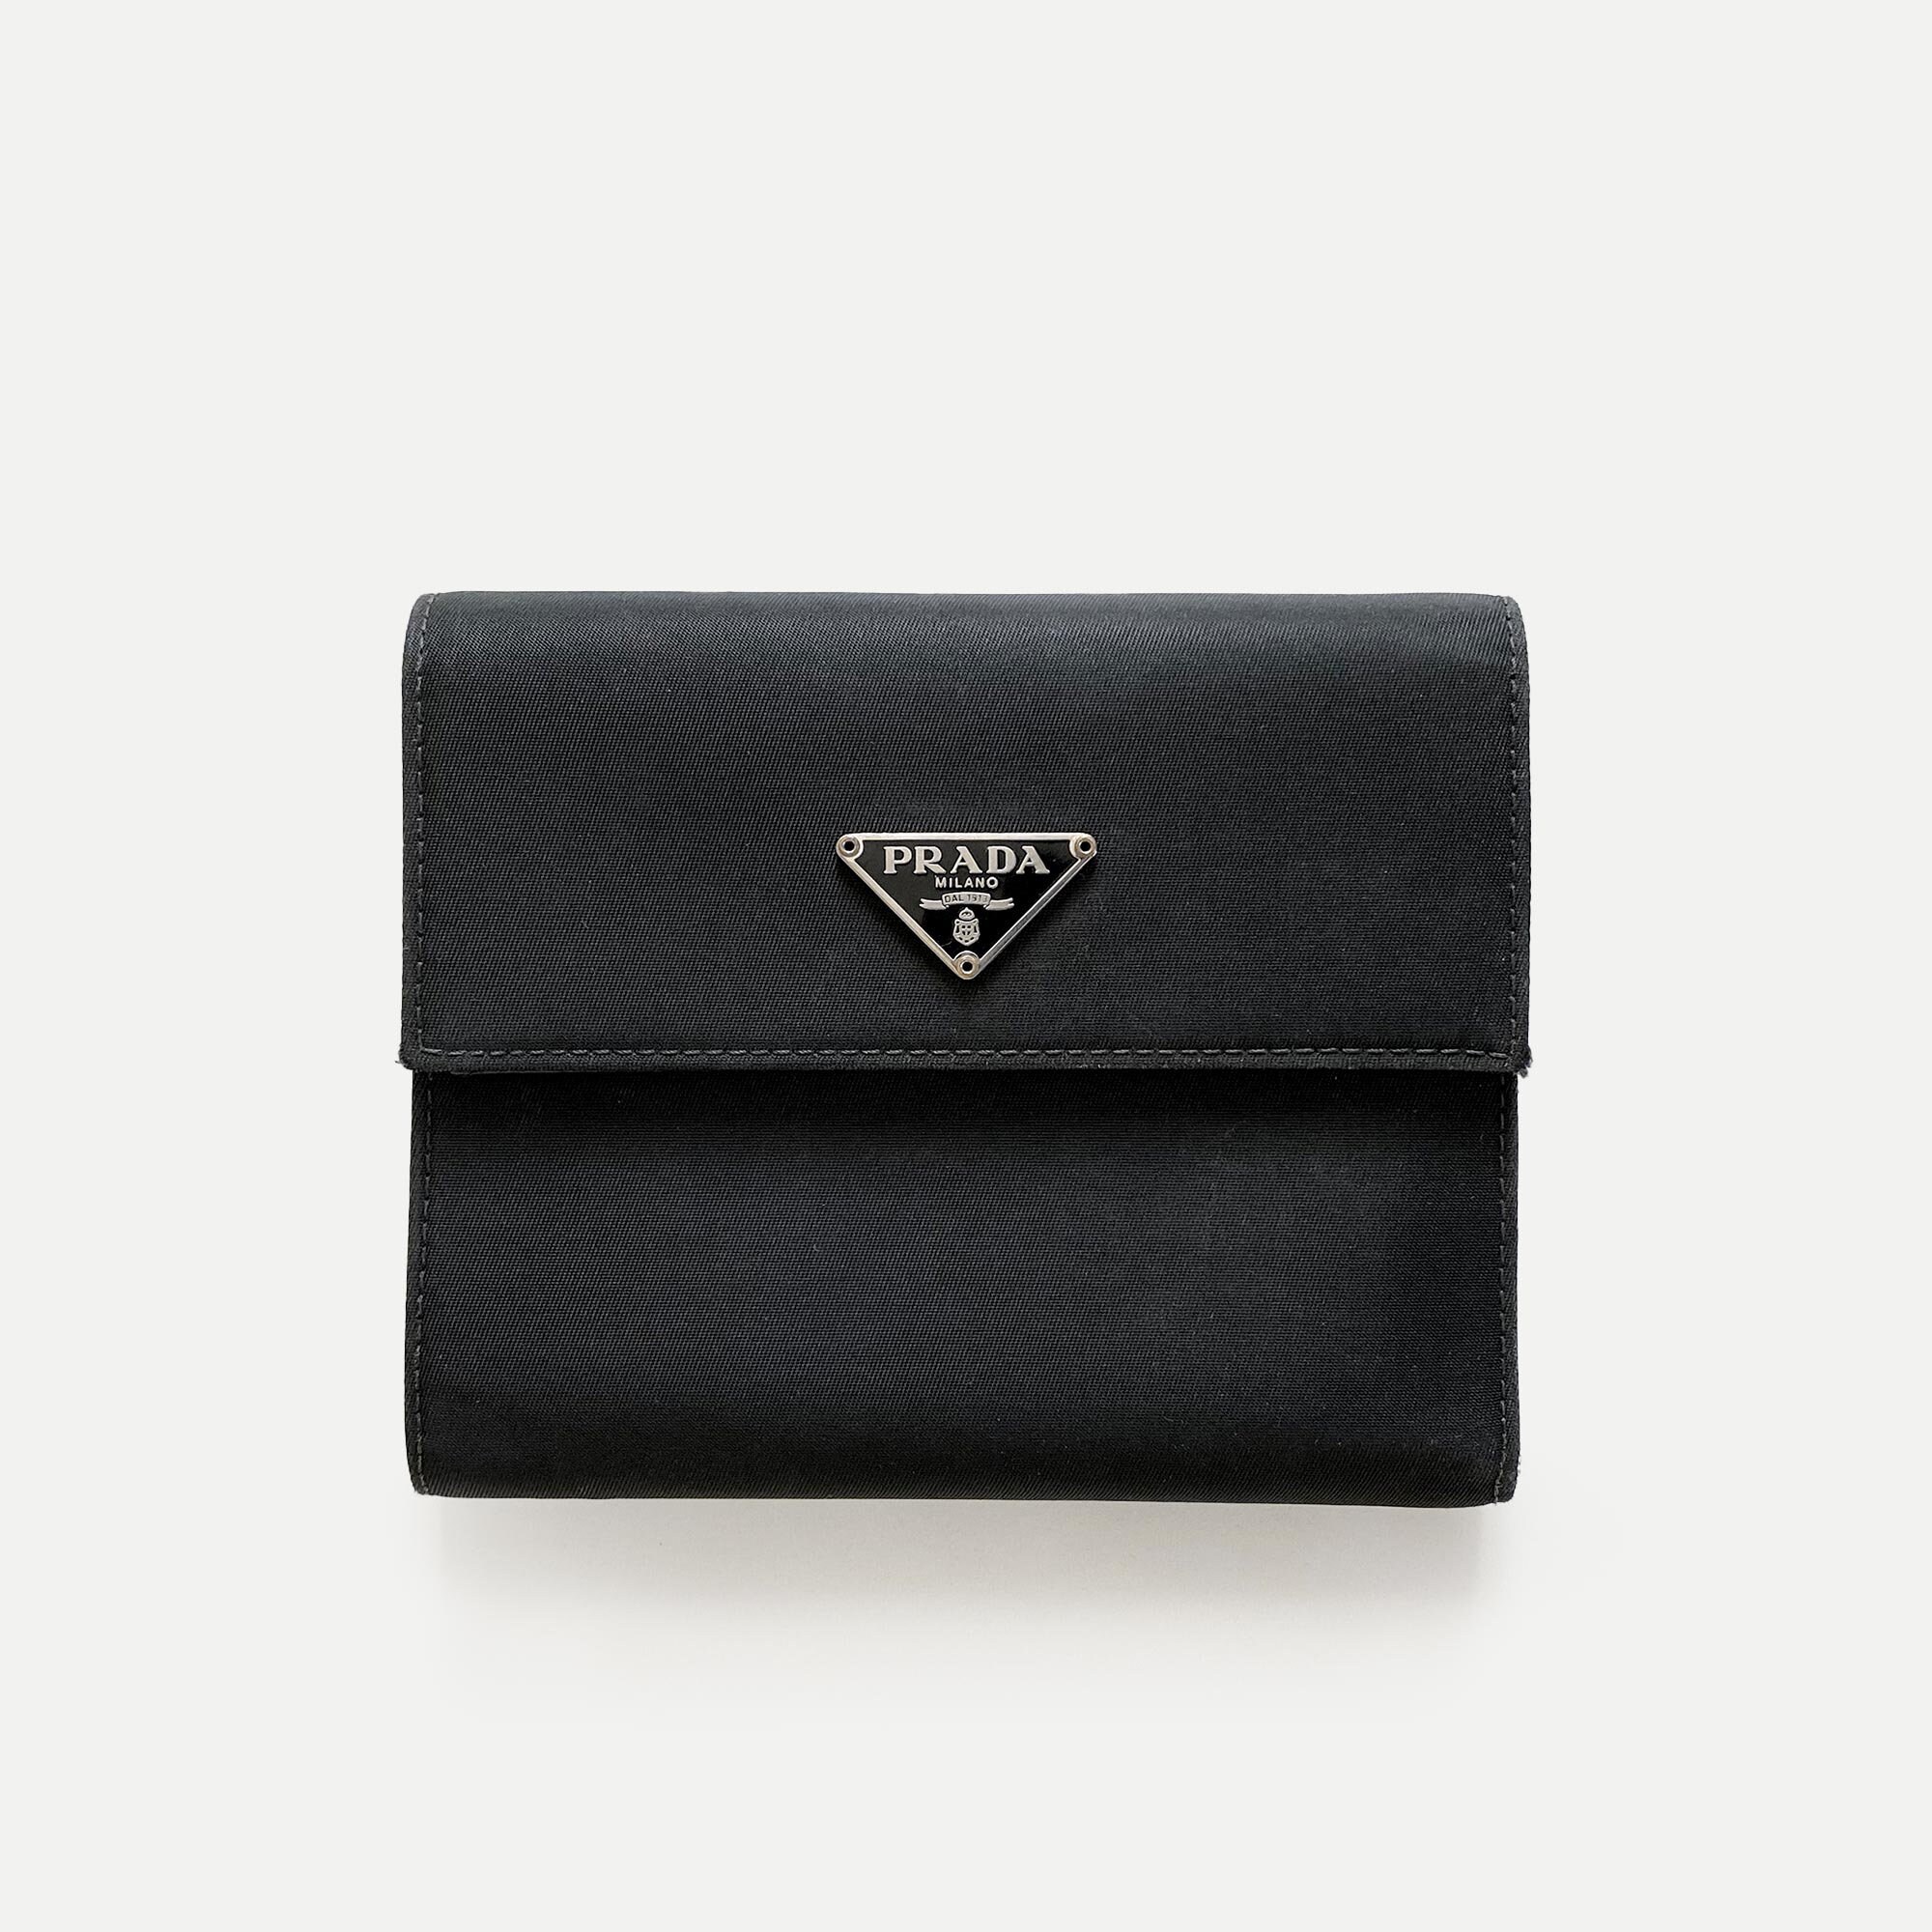 PRADA BLACK Tessuto NYLON Saffiano Leather Bi Fold WALLET Zip Clutch  Authentic!